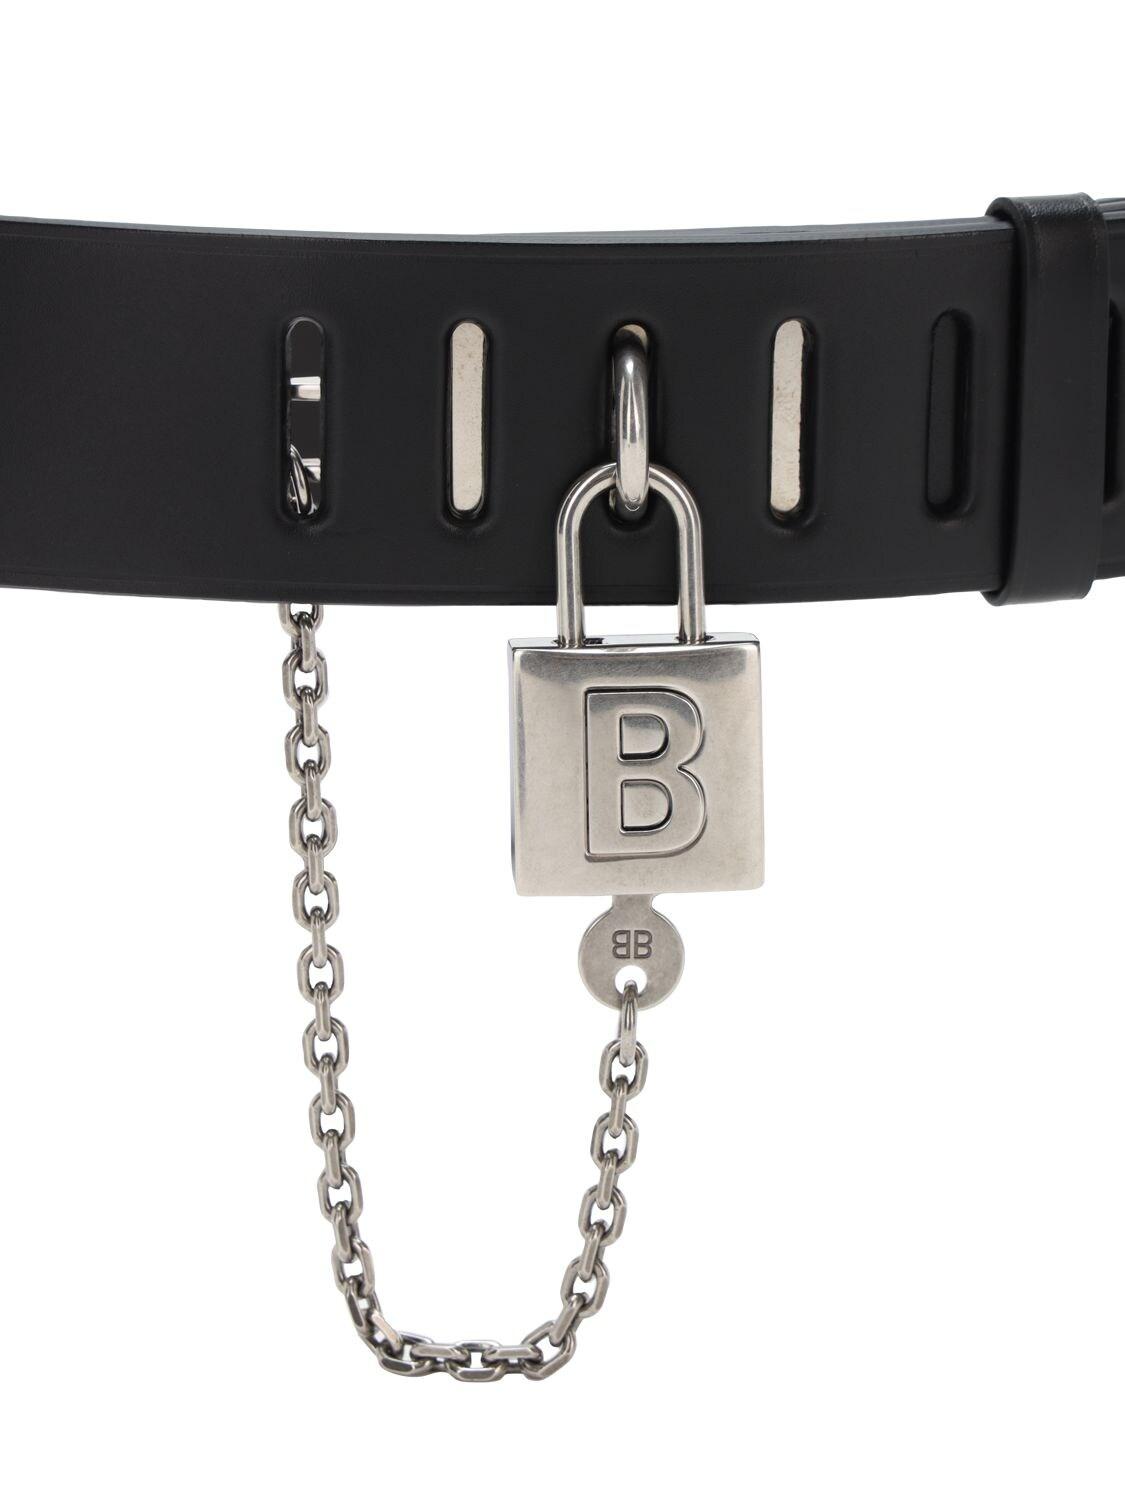 Balenciaga 50mm Leather Lock Belt in Black for Men | Lyst